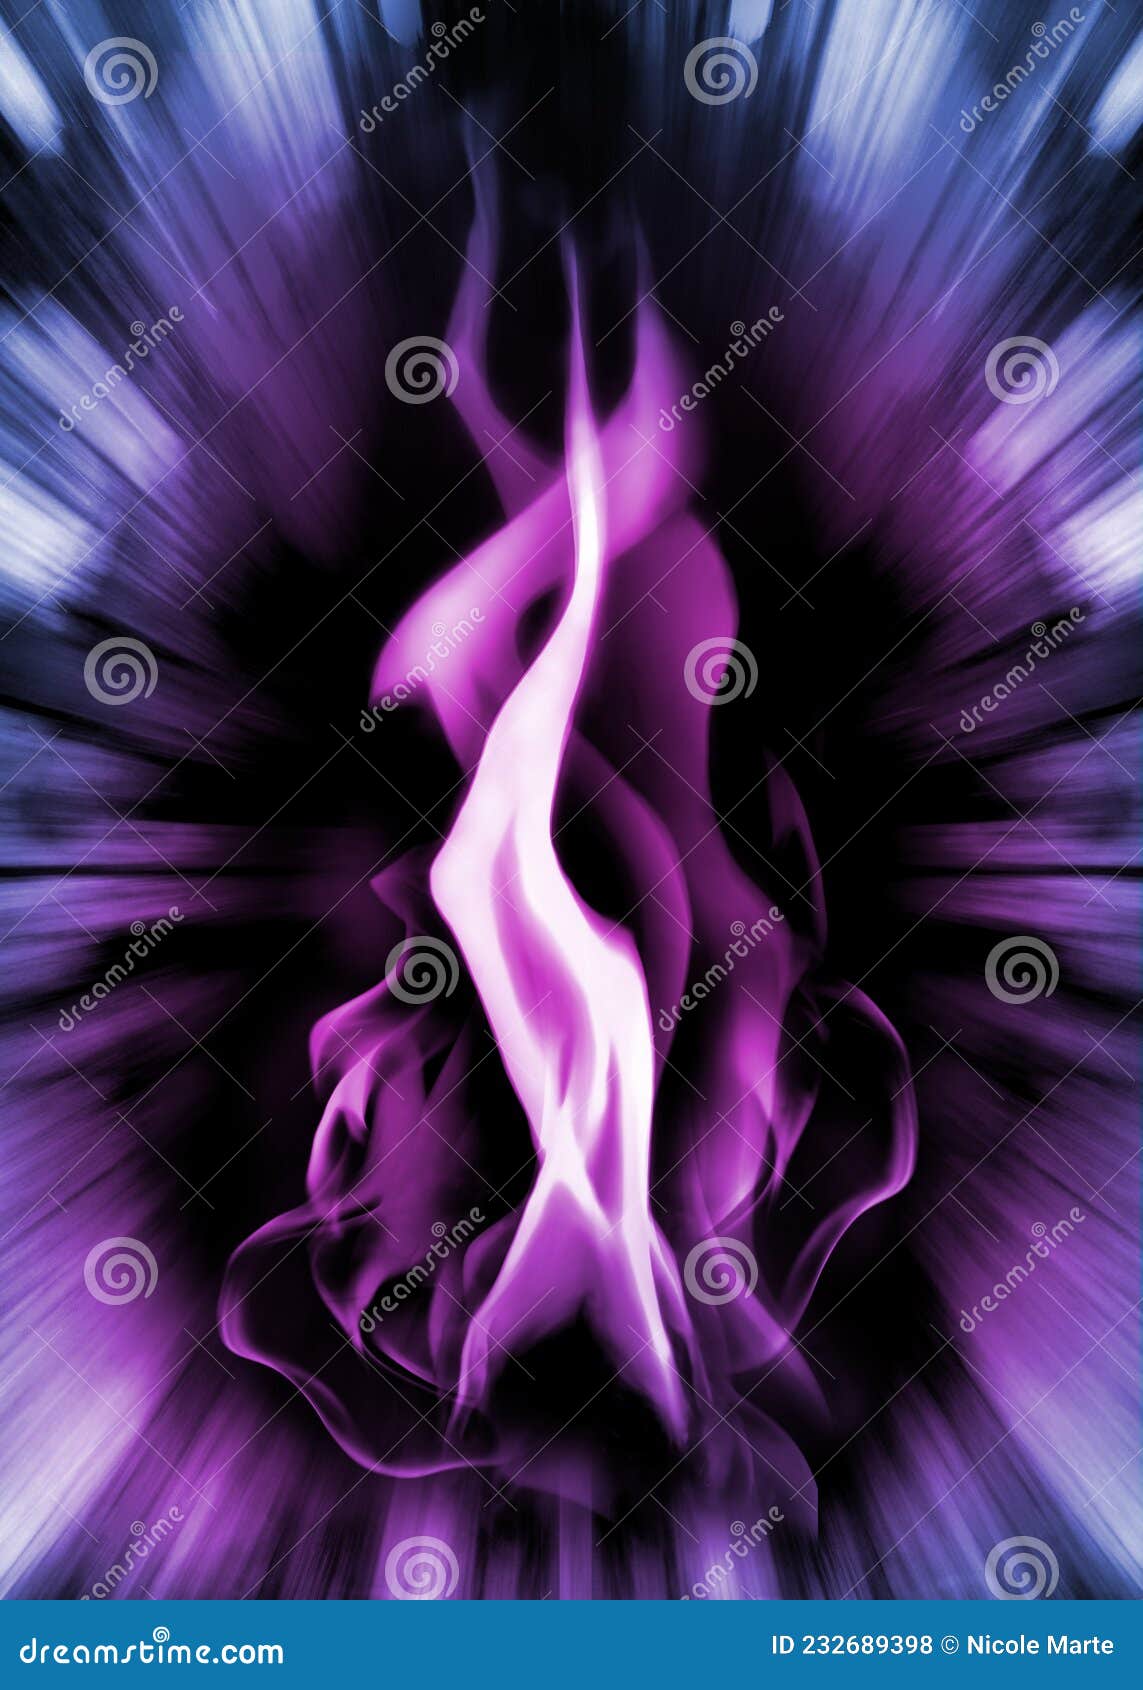 the violet flame of saint germain - divine energy - transformation